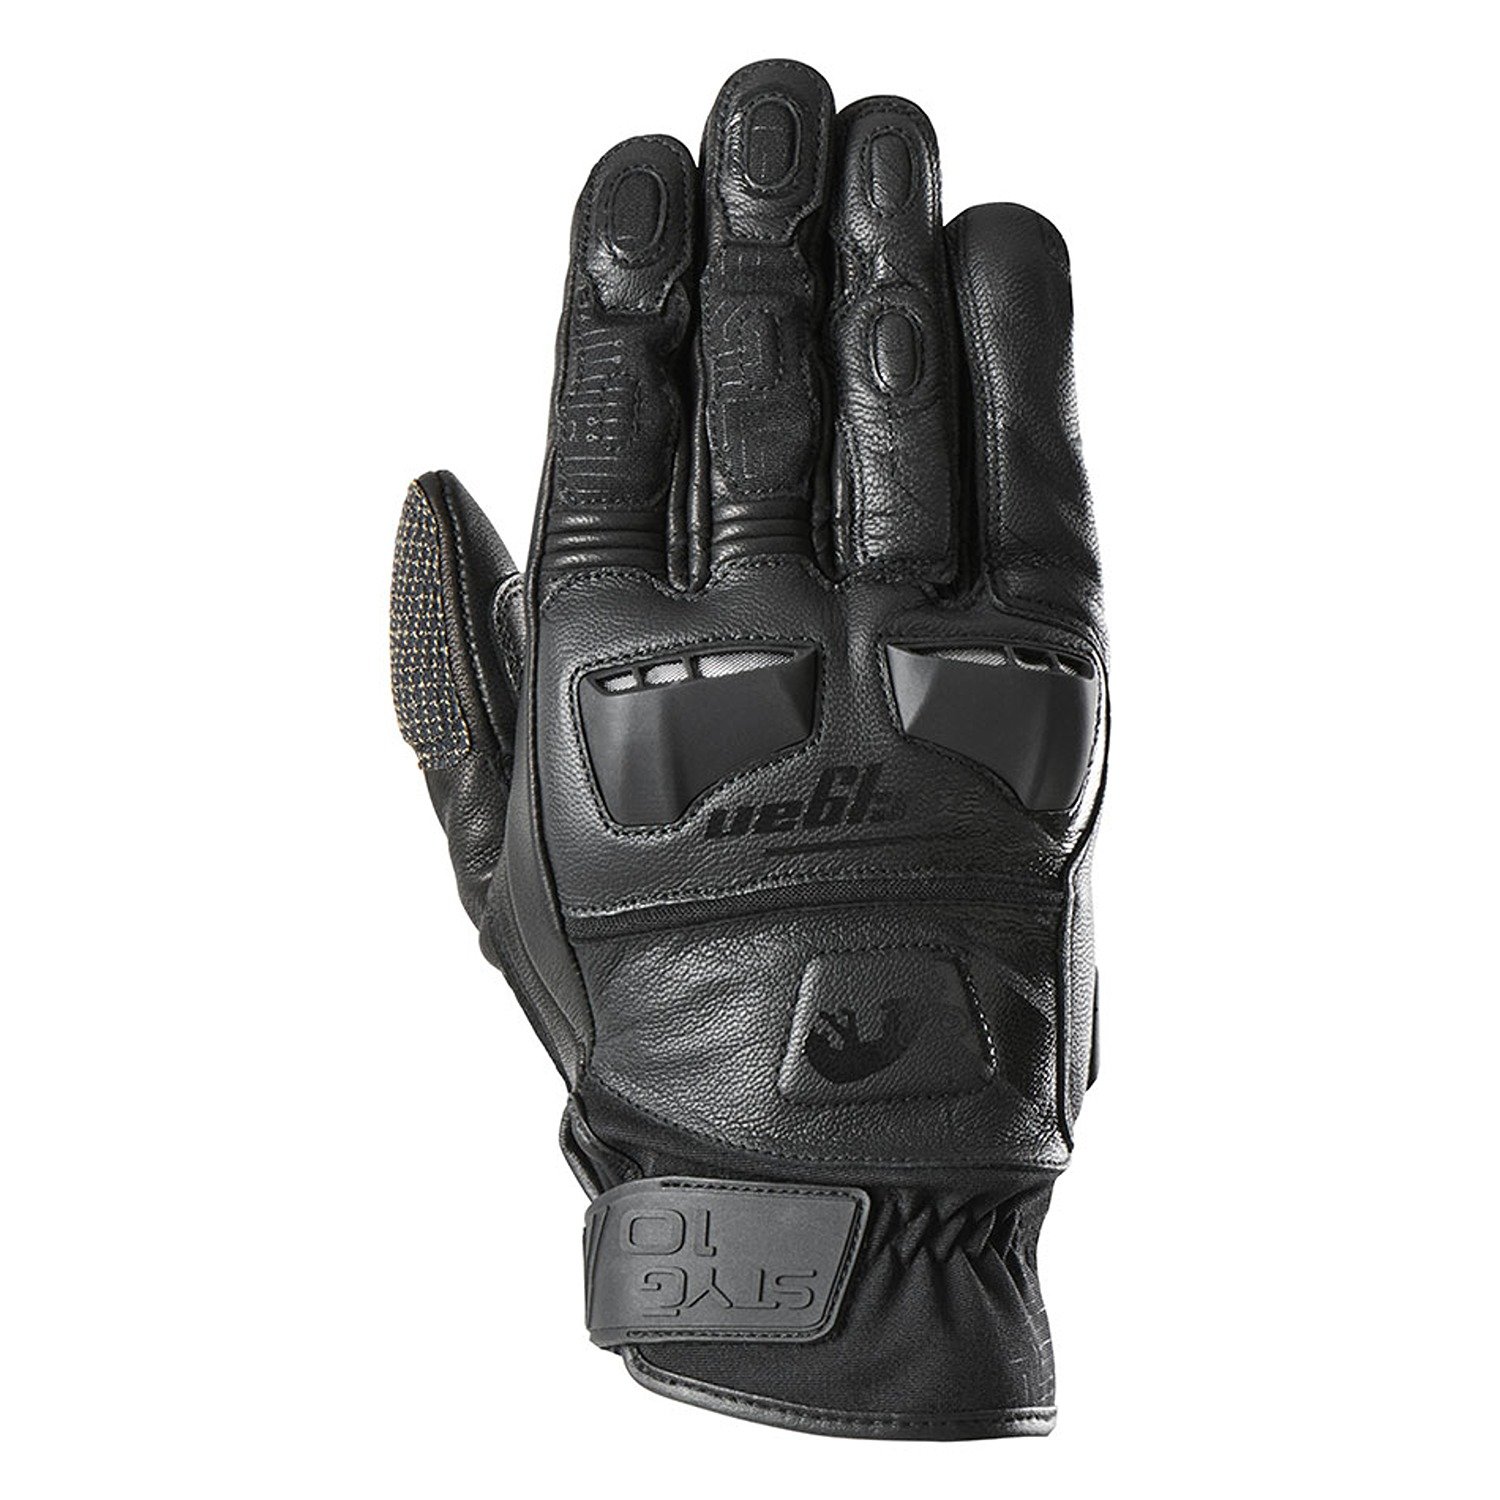 Image of Furygan Styg10 Gloves Black Size L ID 3435980379162